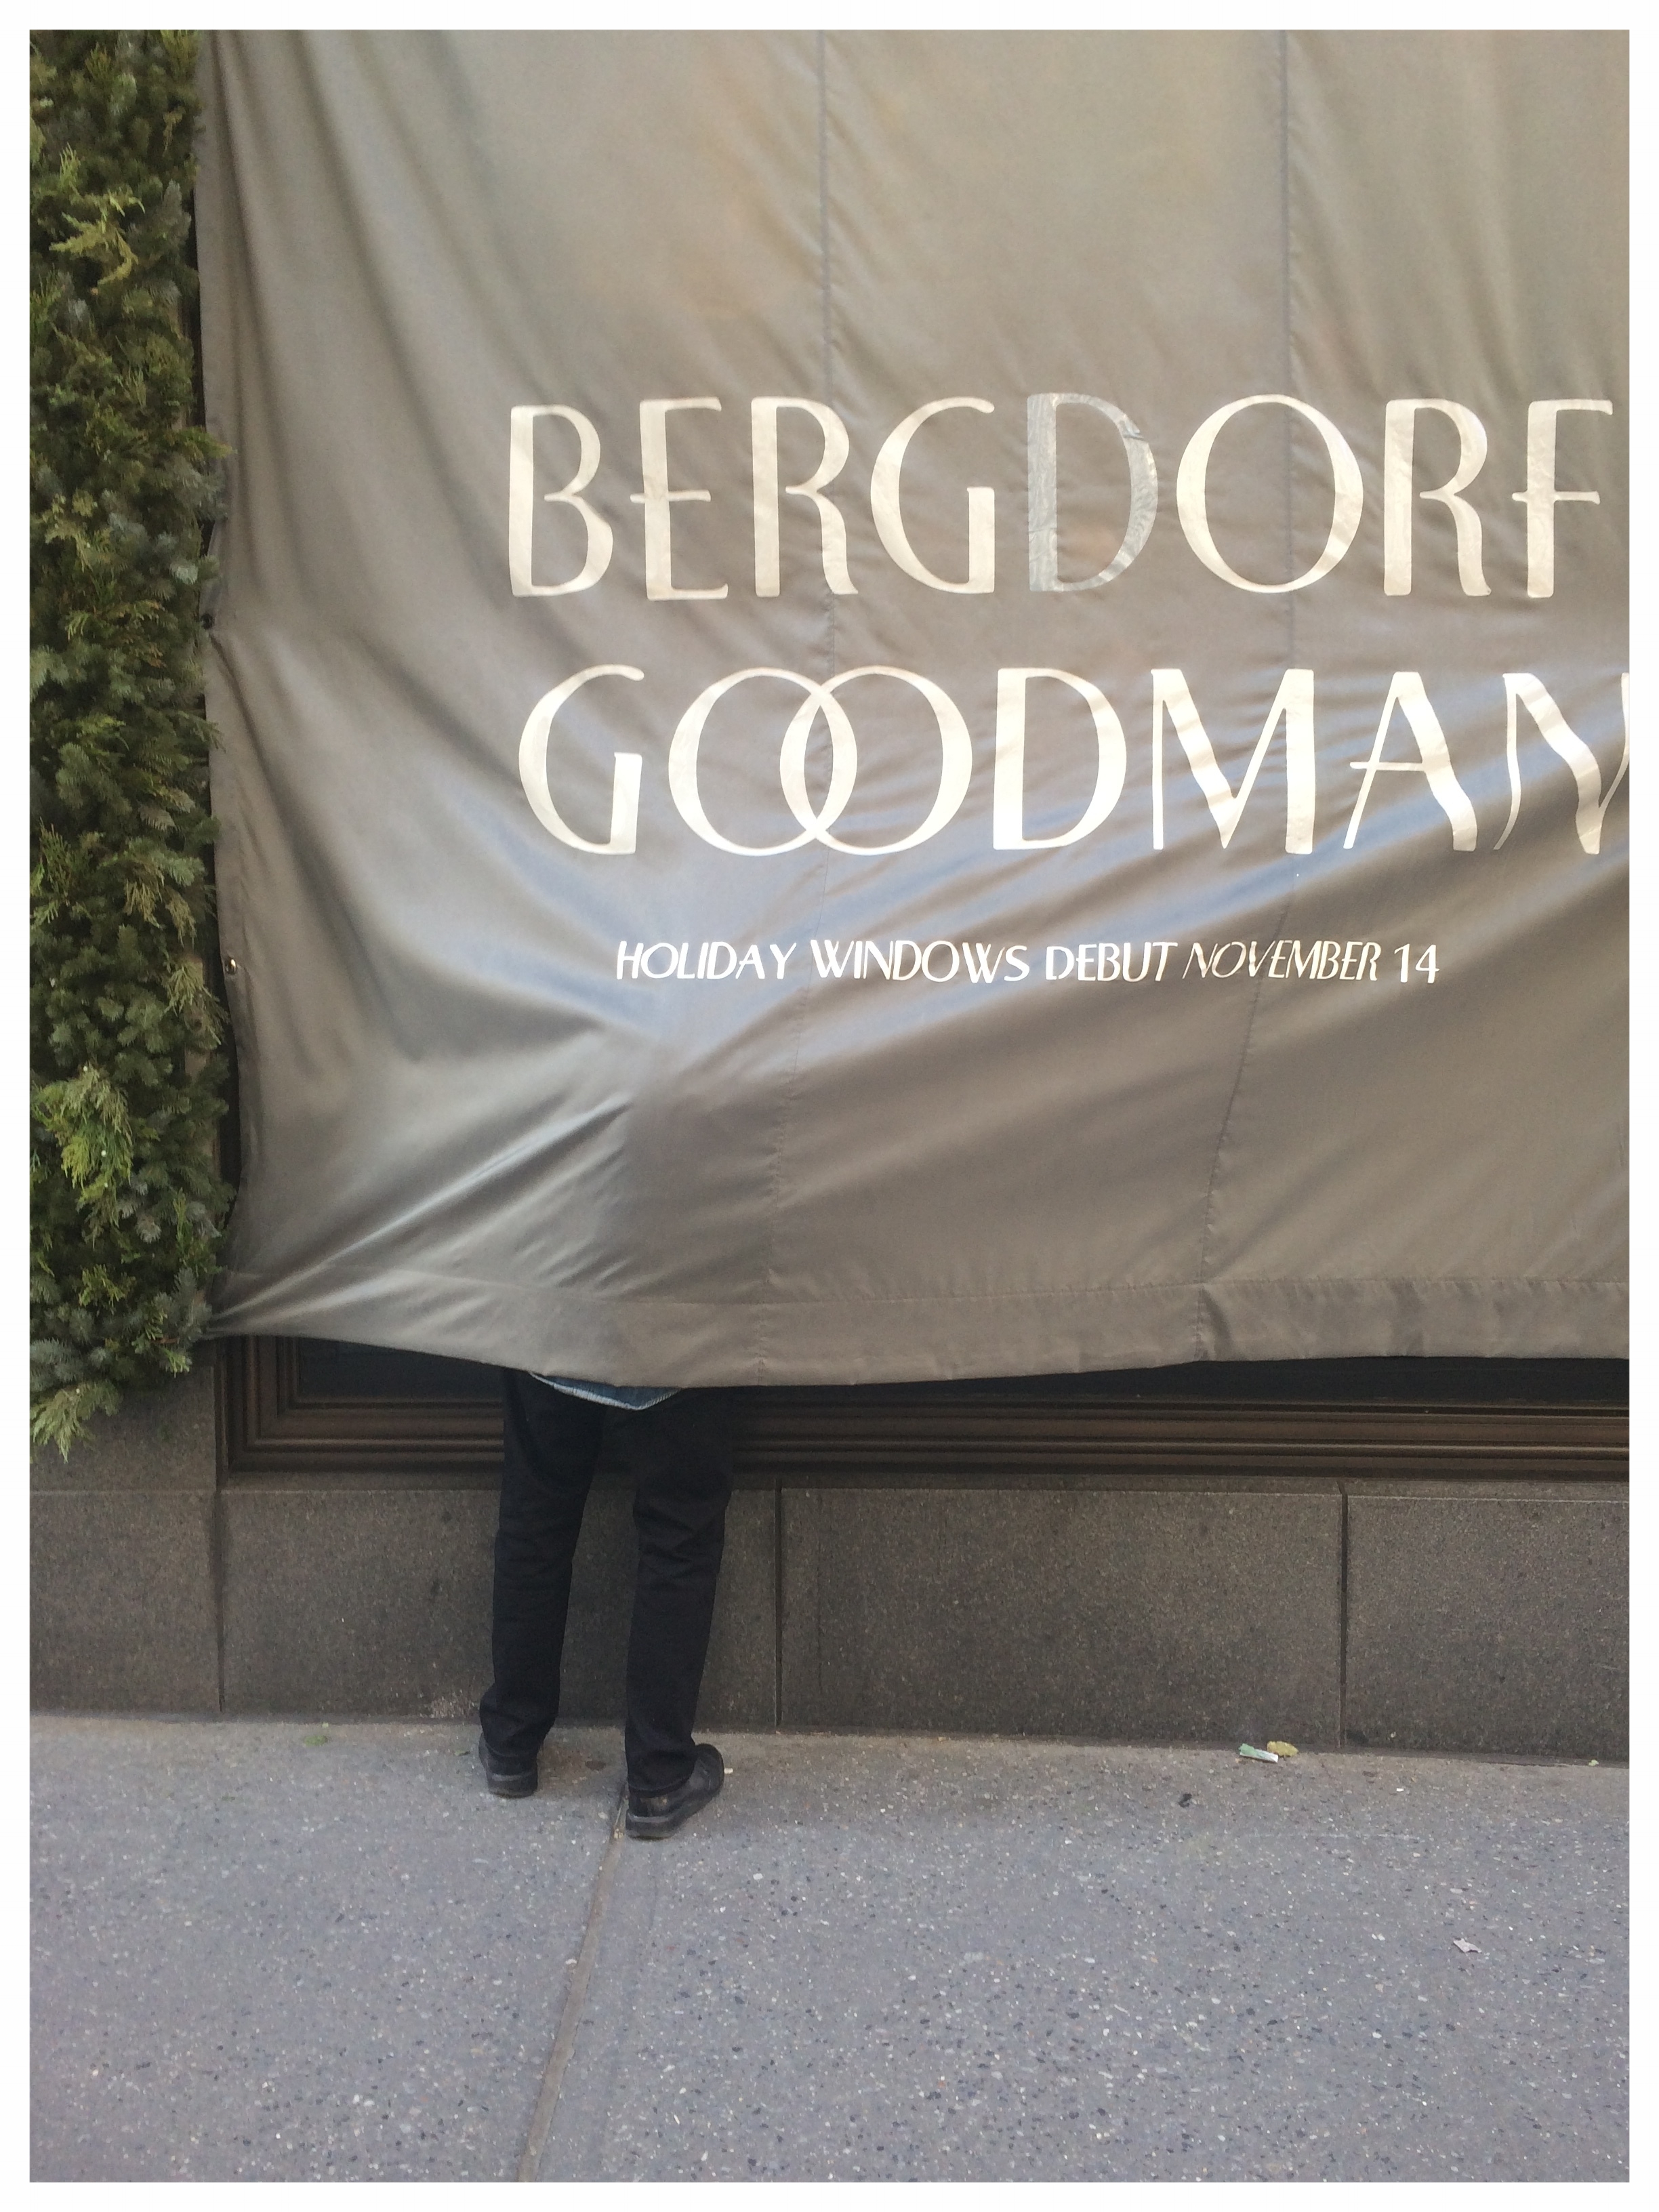 David Hoey, Bergdorf's creative genius taking a peek.